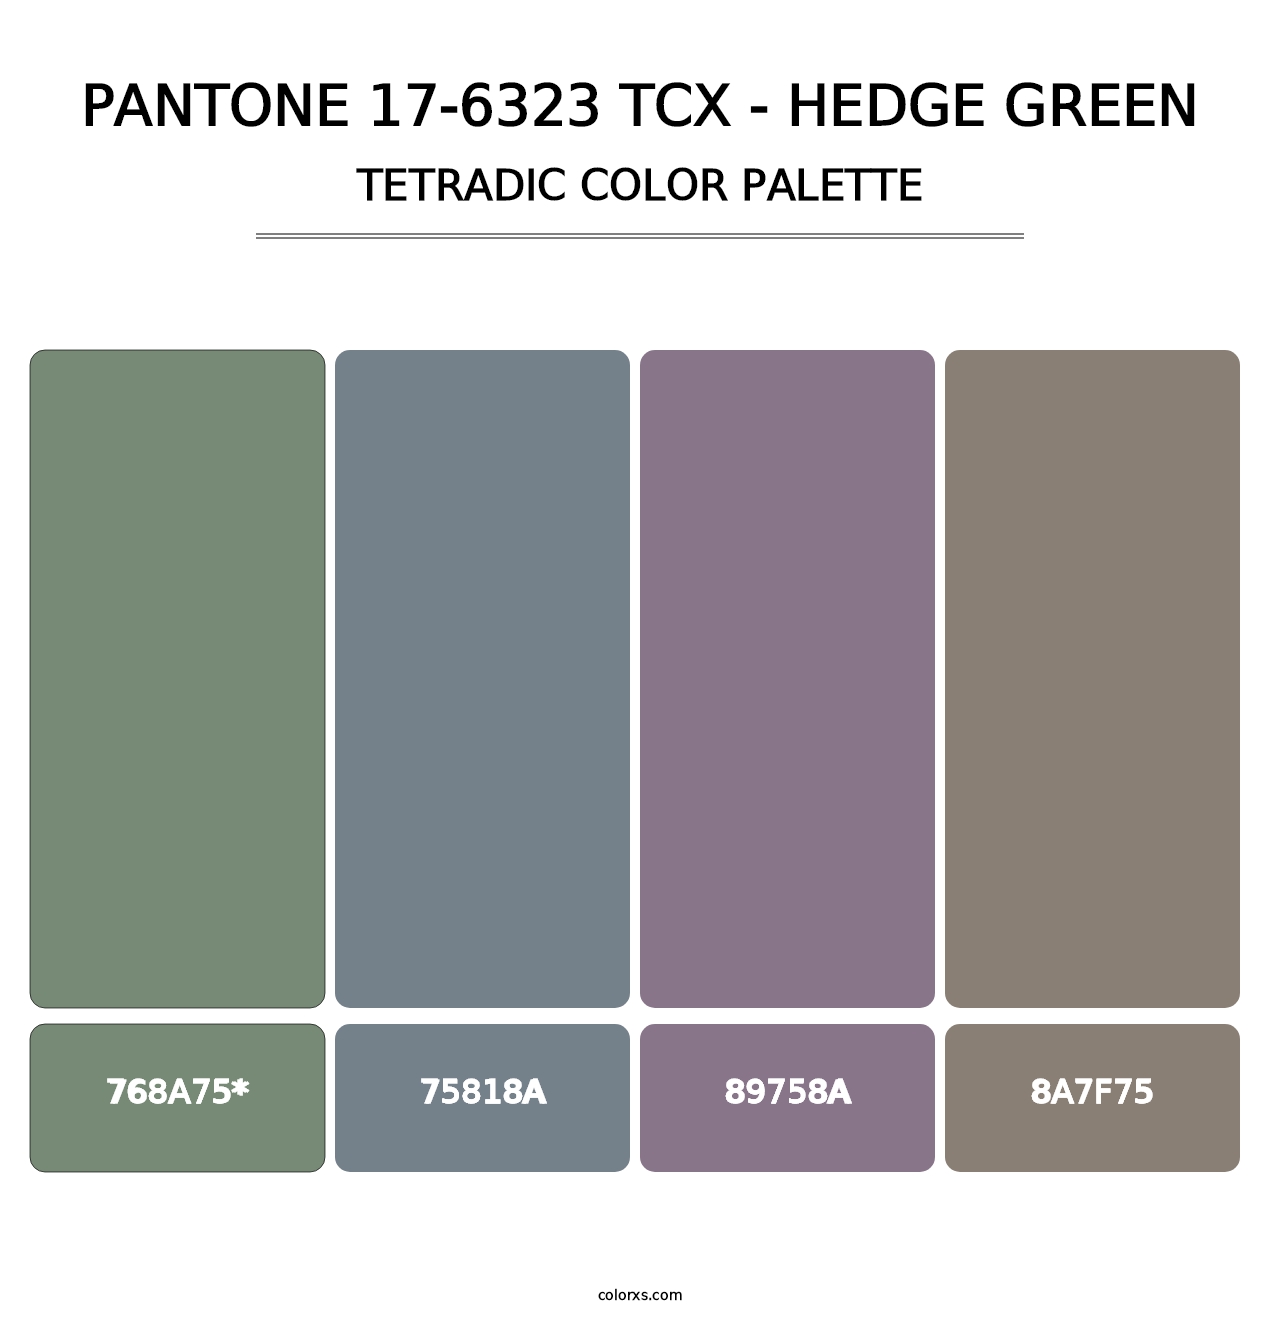 PANTONE 17-6323 TCX - Hedge Green - Tetradic Color Palette